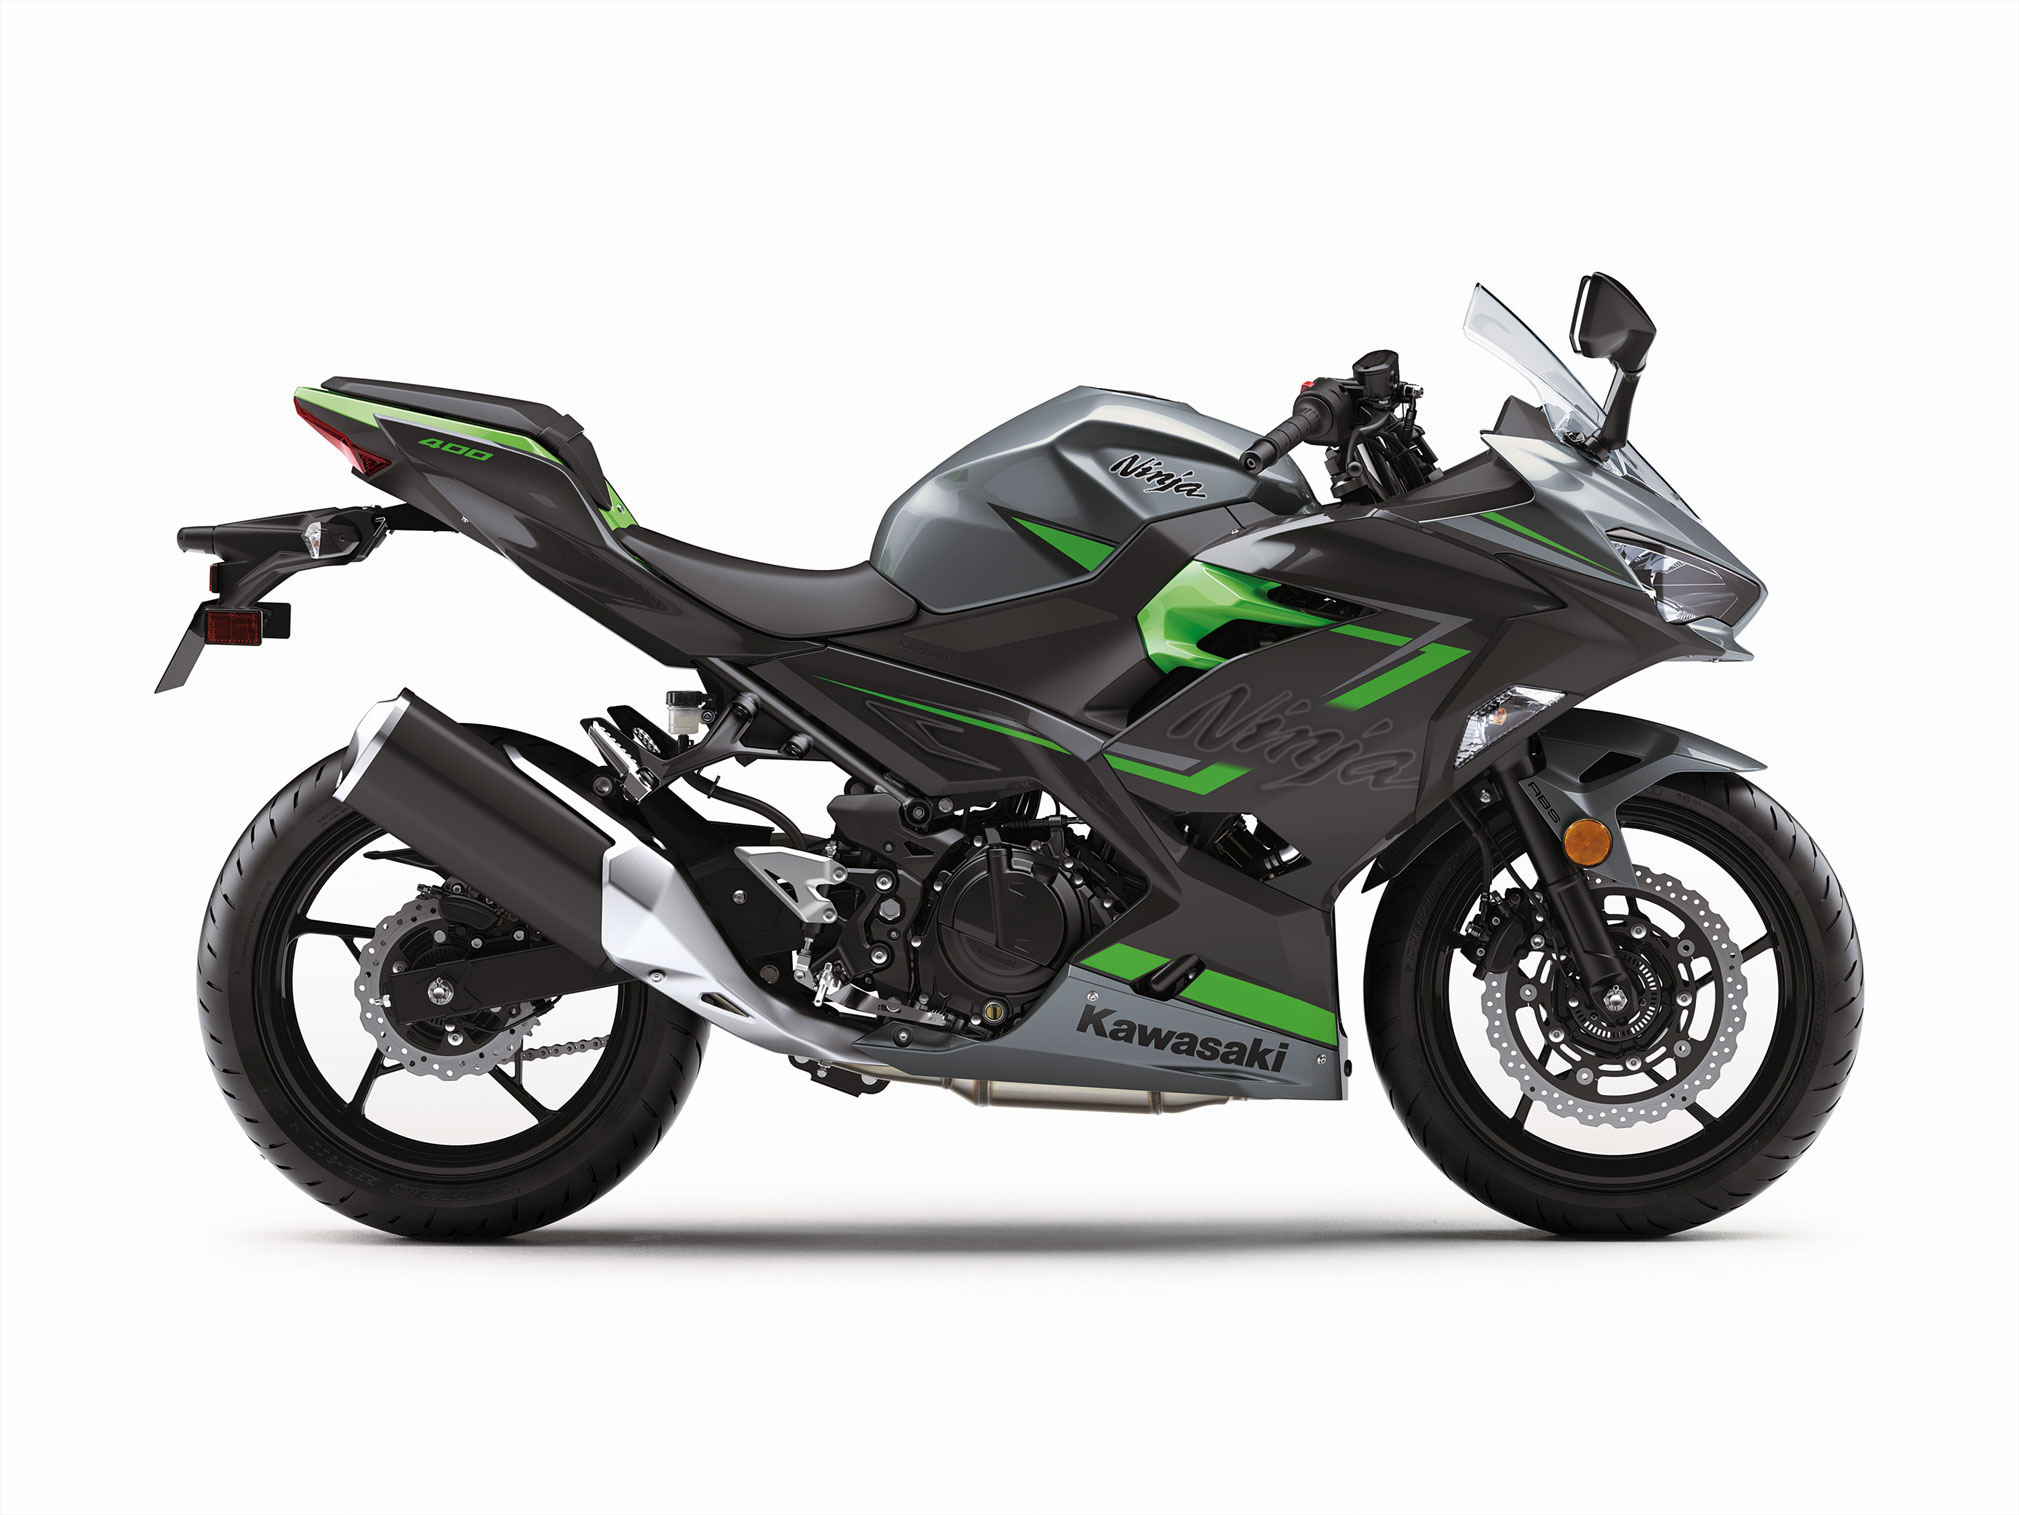 2019 Kawasaki Ninja 400 Guide • Total Motorcycle